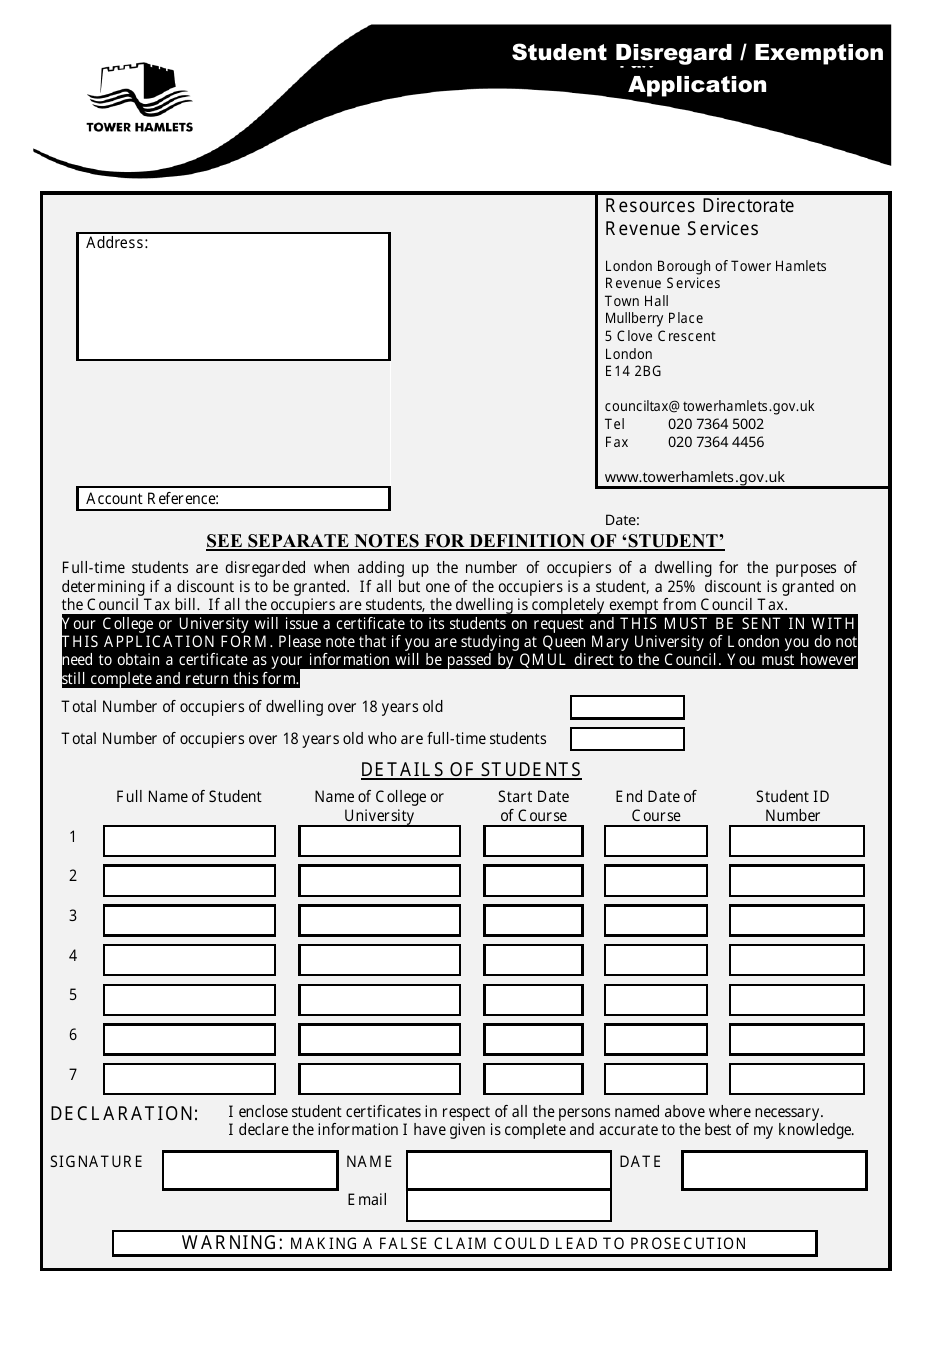 Student Disregard / Exemption Application Form - London Borough of Tower Hamlets, United Kingdom, Page 1